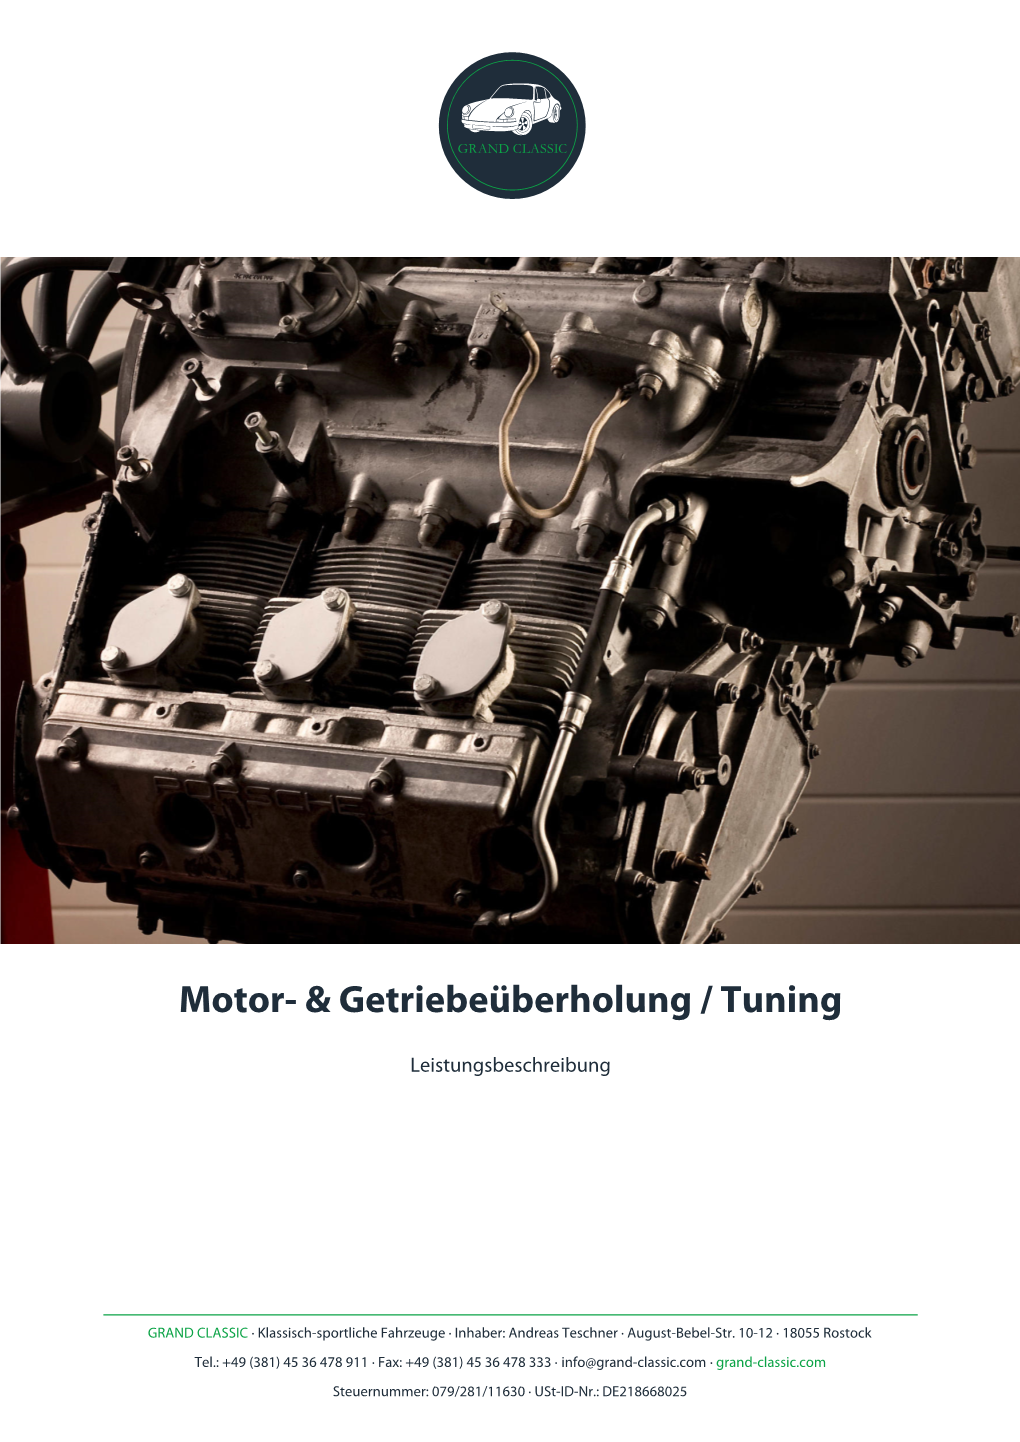 Motor- & Getriebeüberholung / Tuning